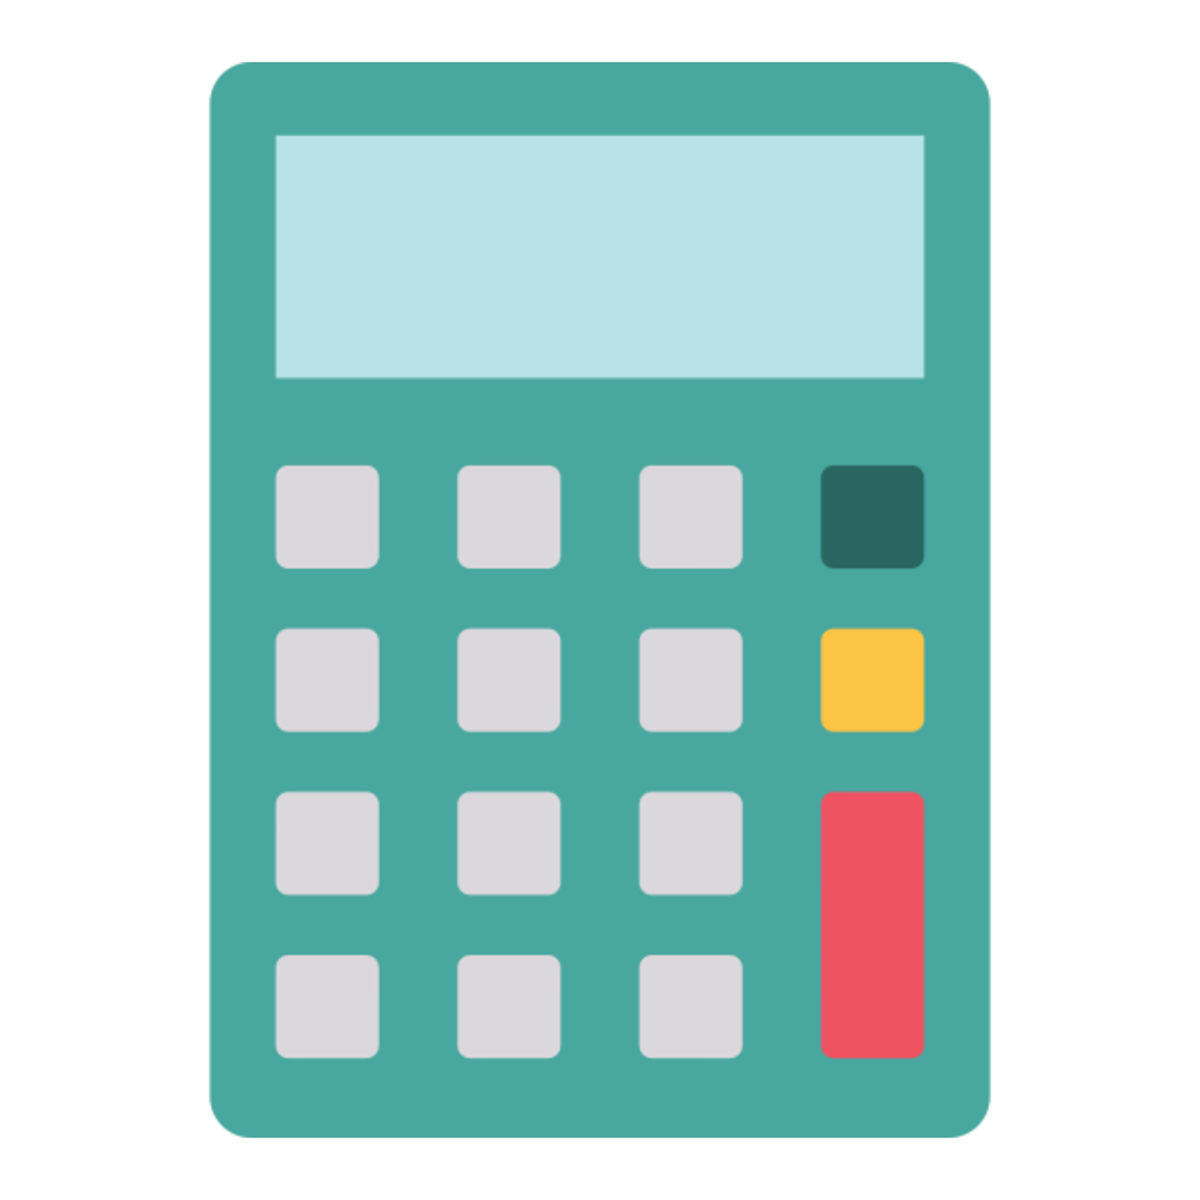 custom resolution calculator